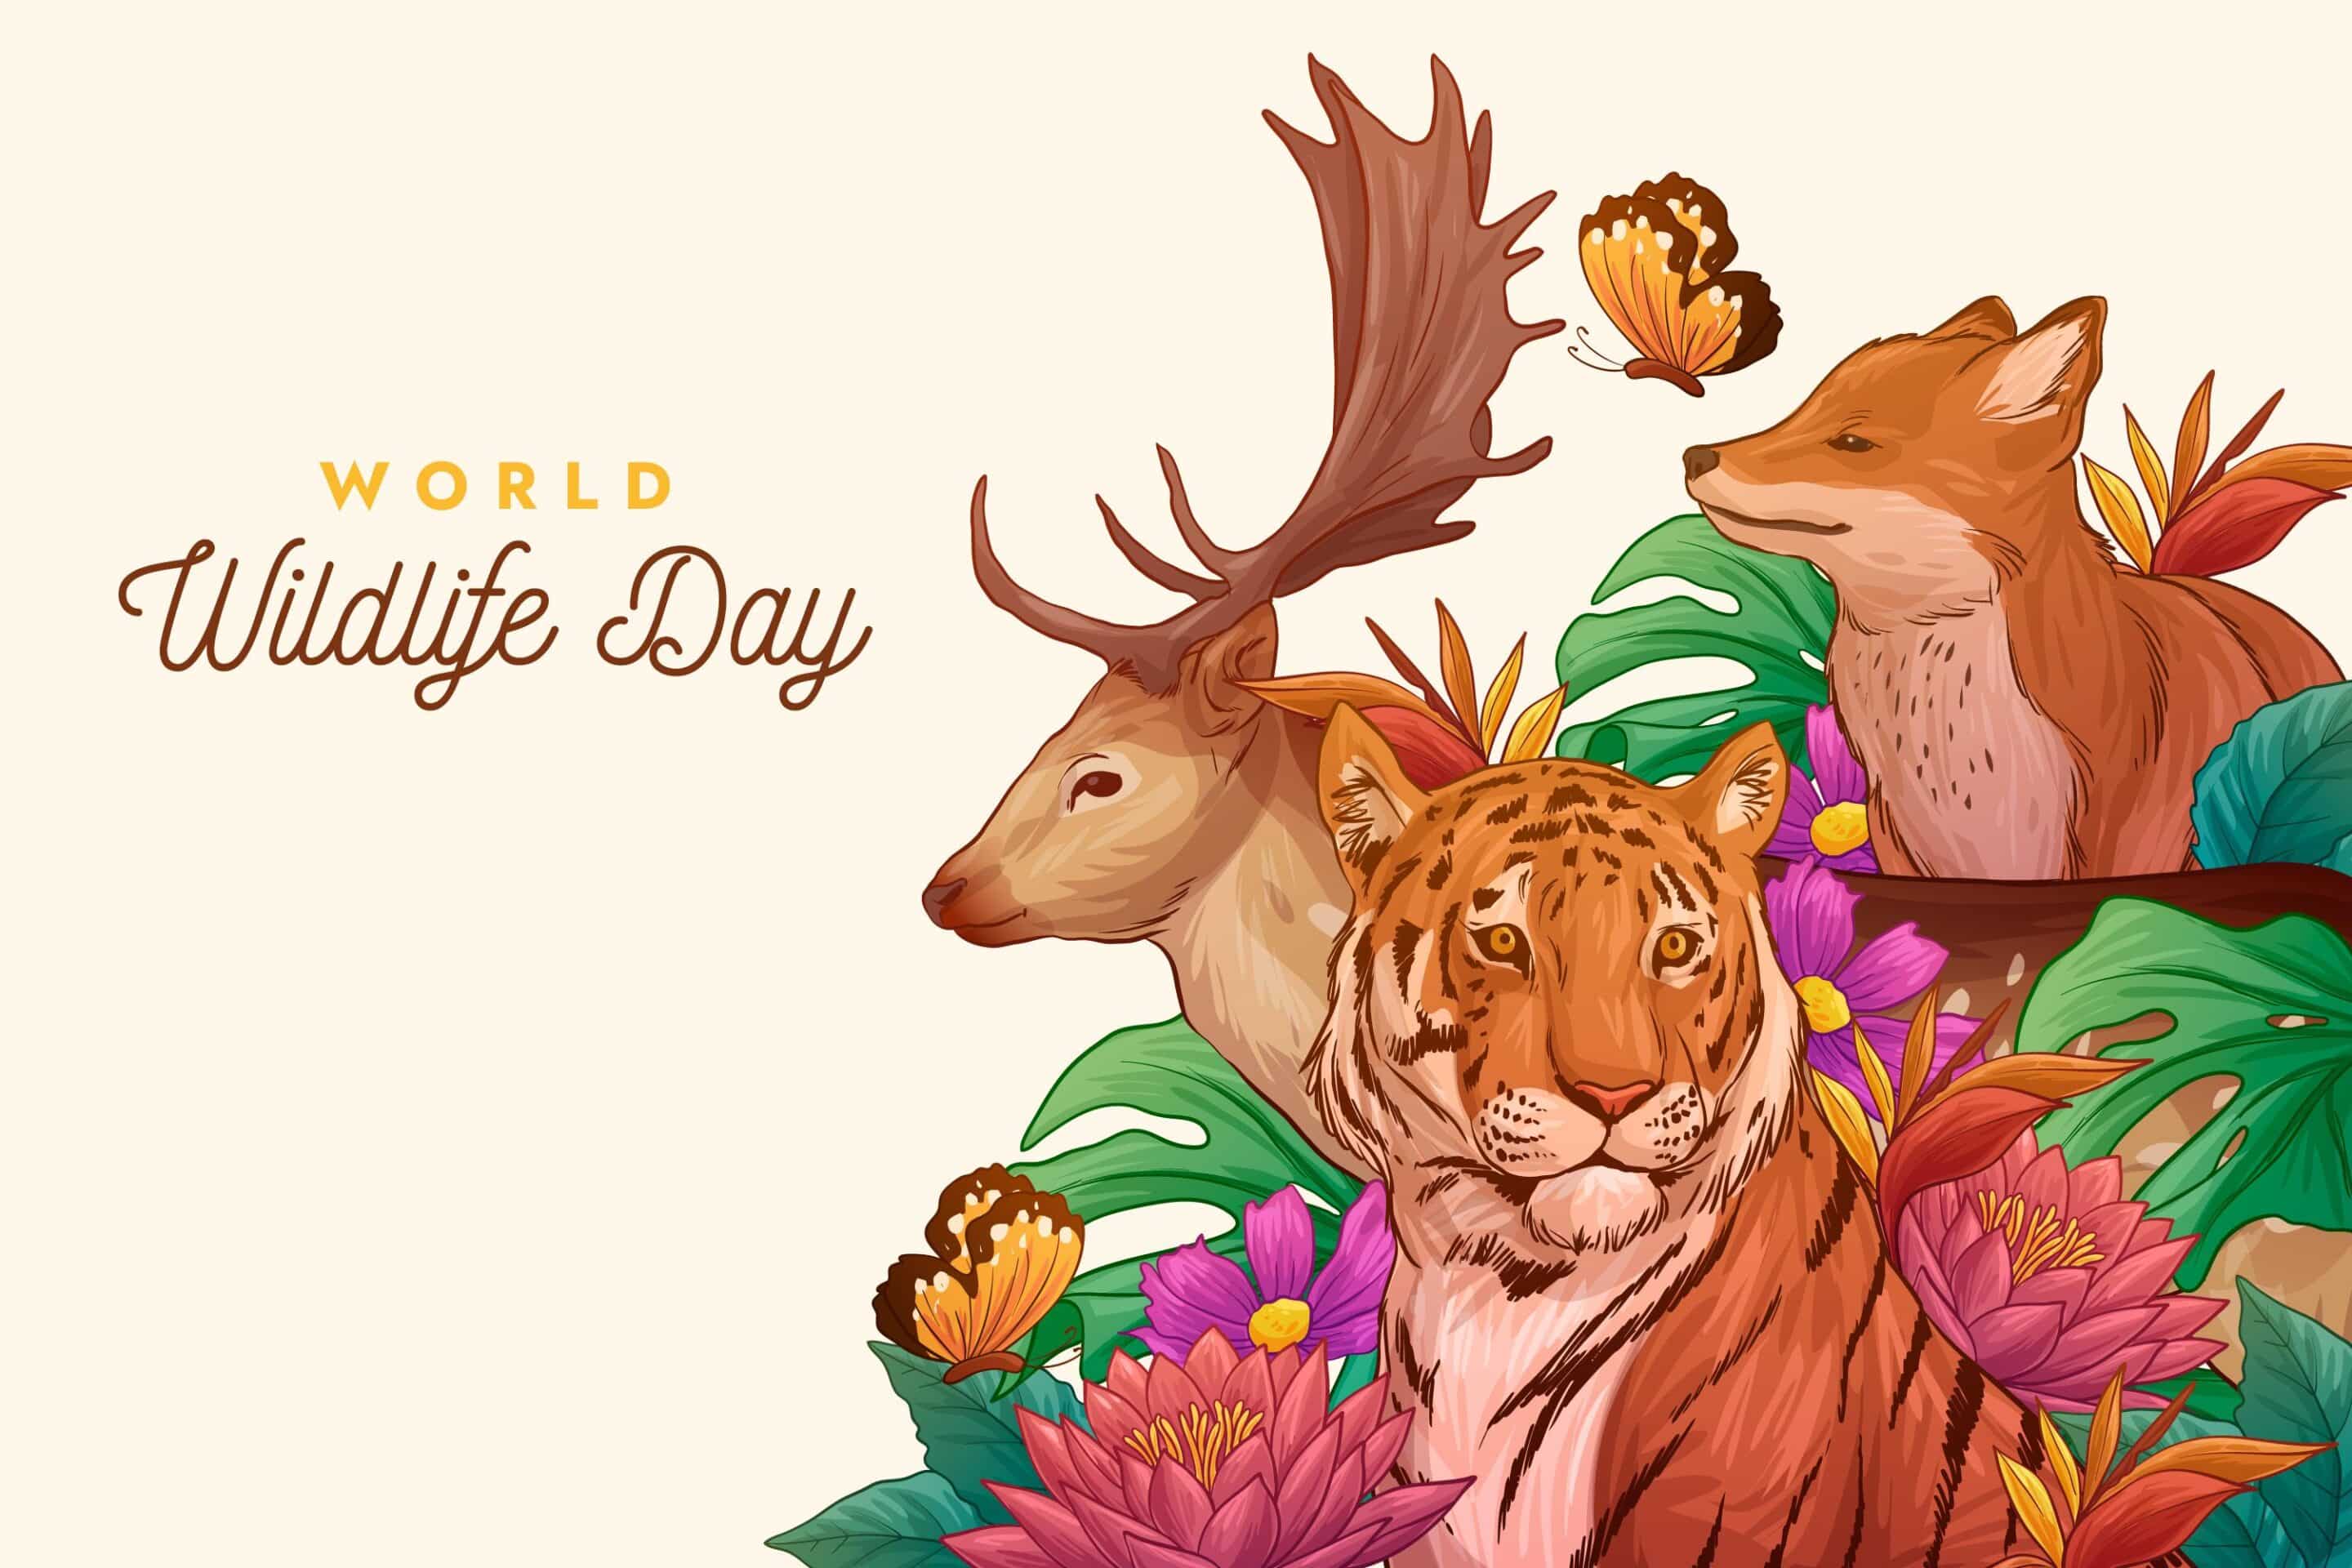 World Wildlife Day February 7, 2022